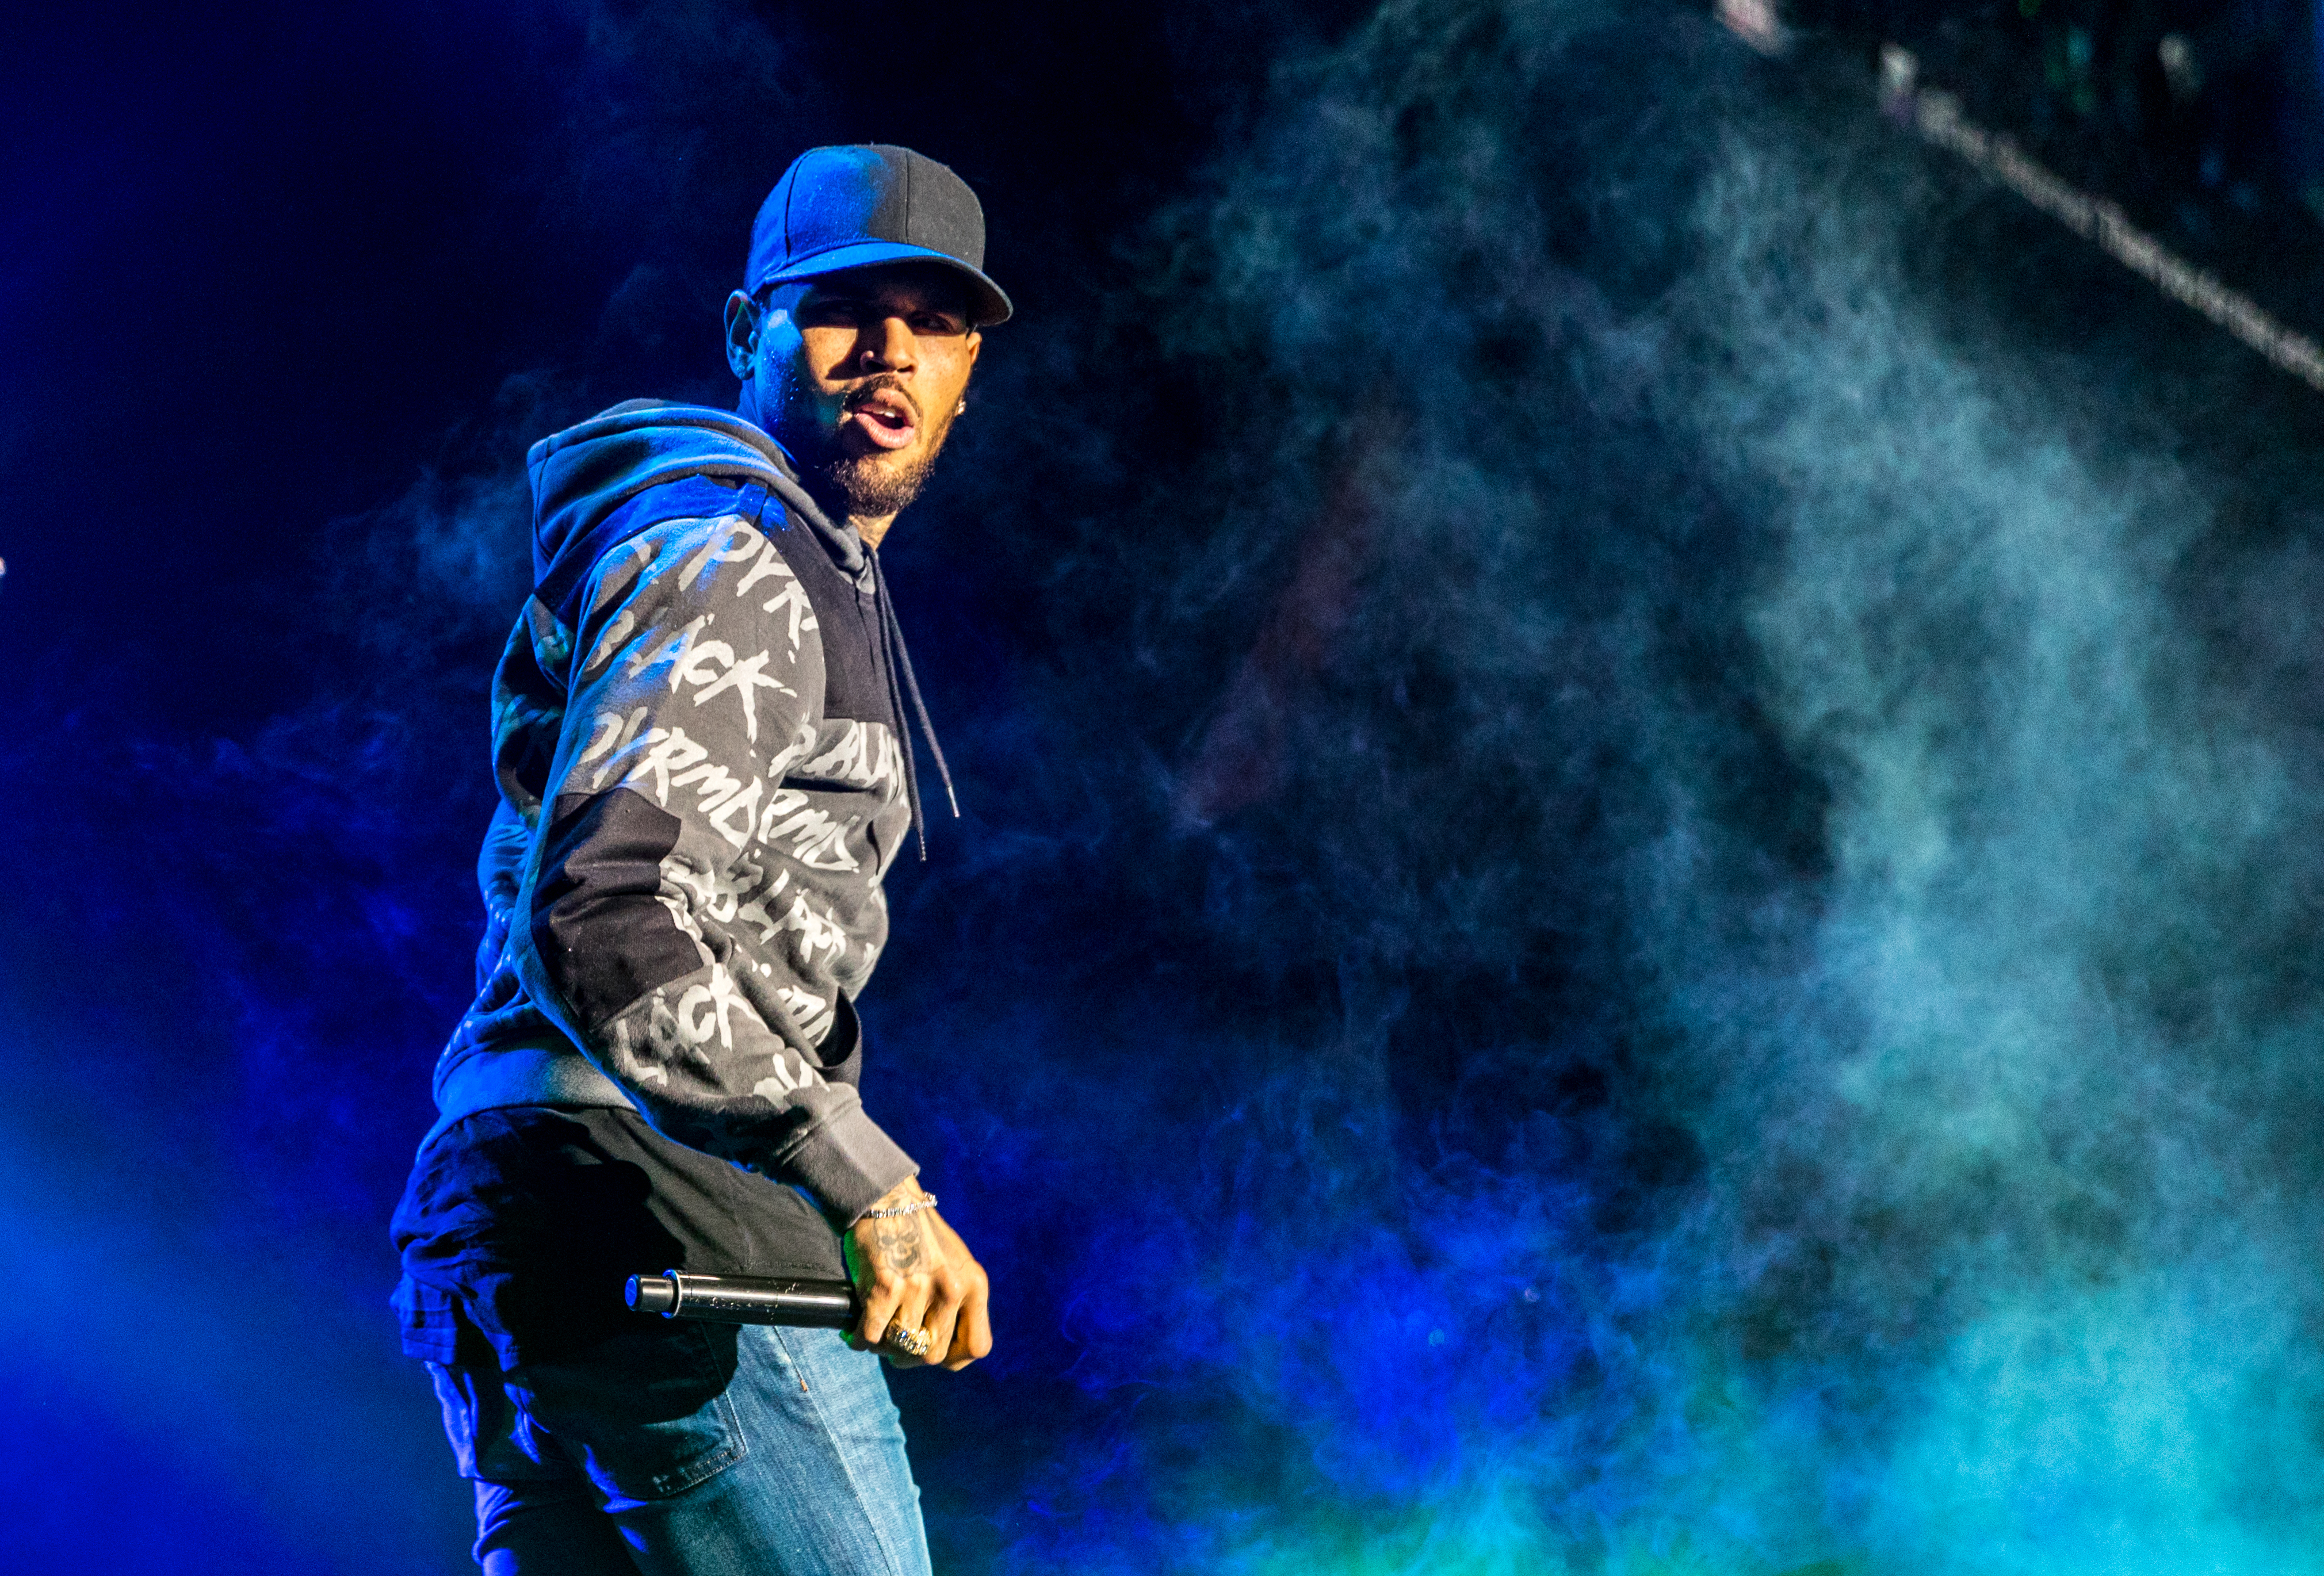 Chris Brown Responds To Karrueche Tran’s Abuse Claims